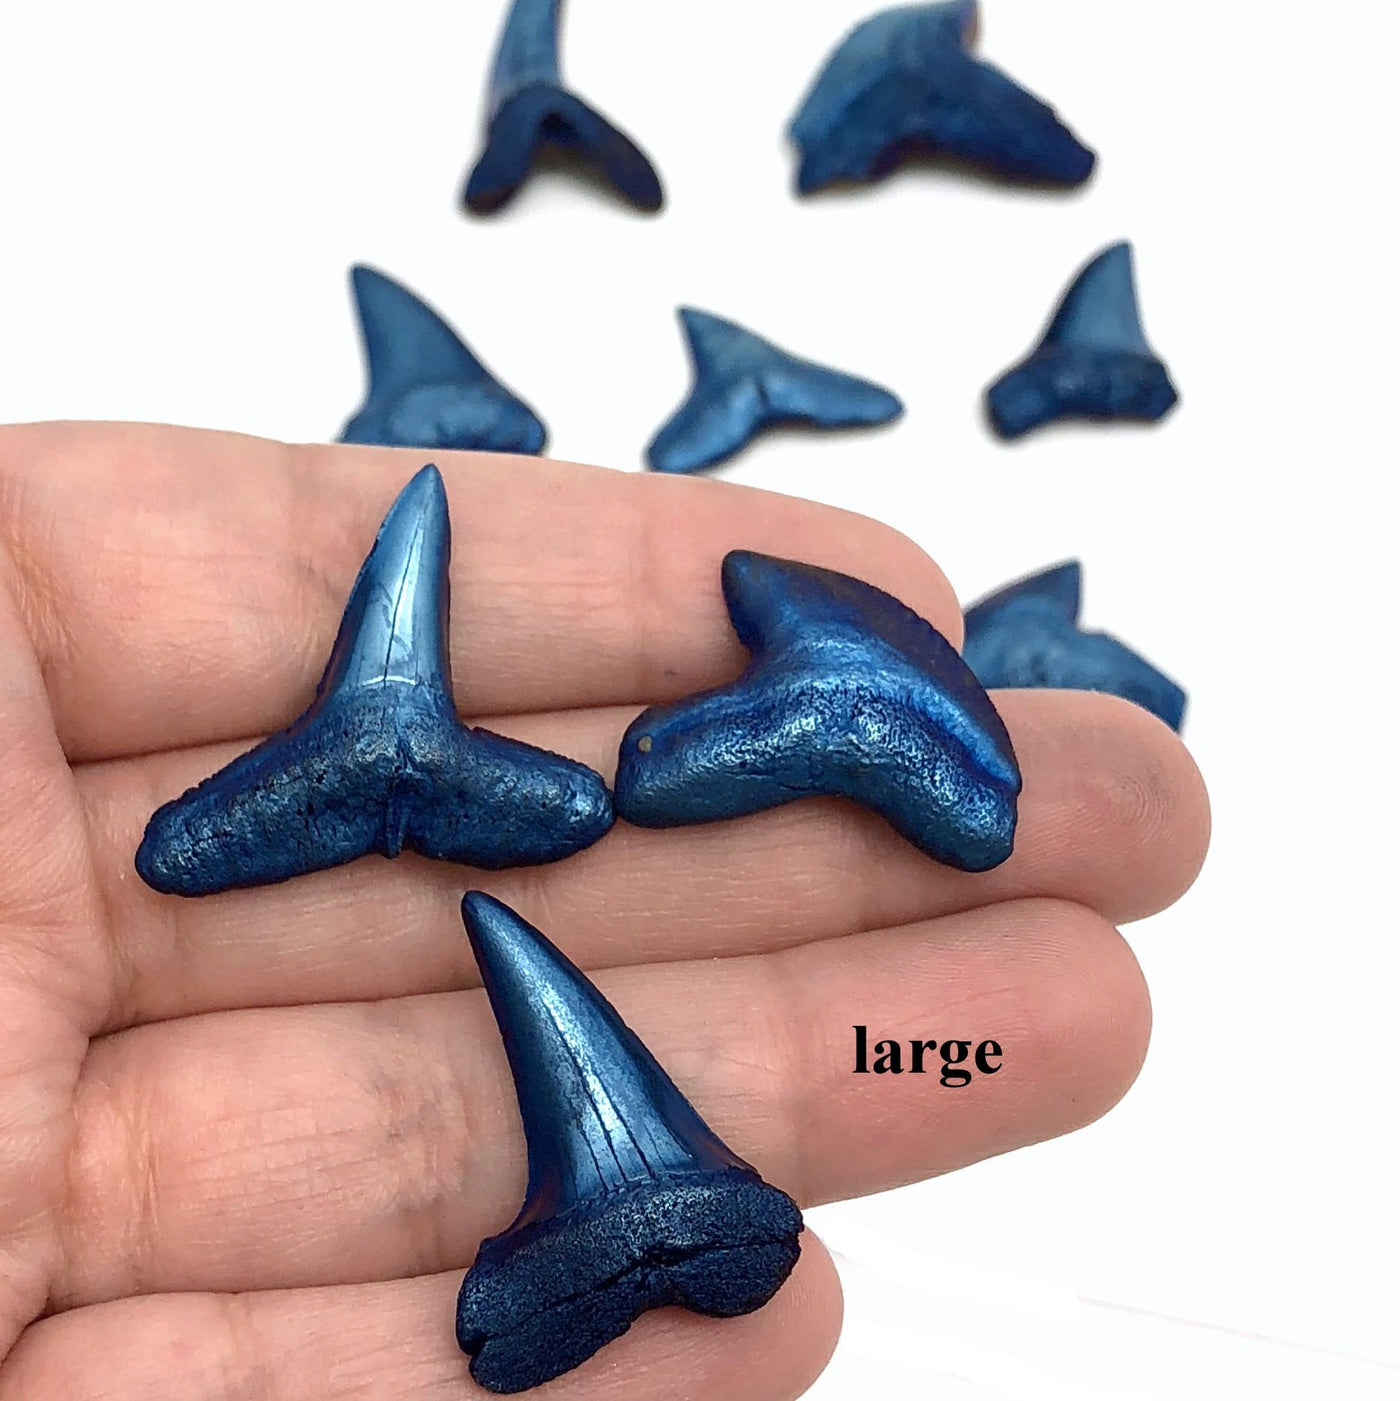 Hand holding up 3 large titanium shark teeth on blurred white background